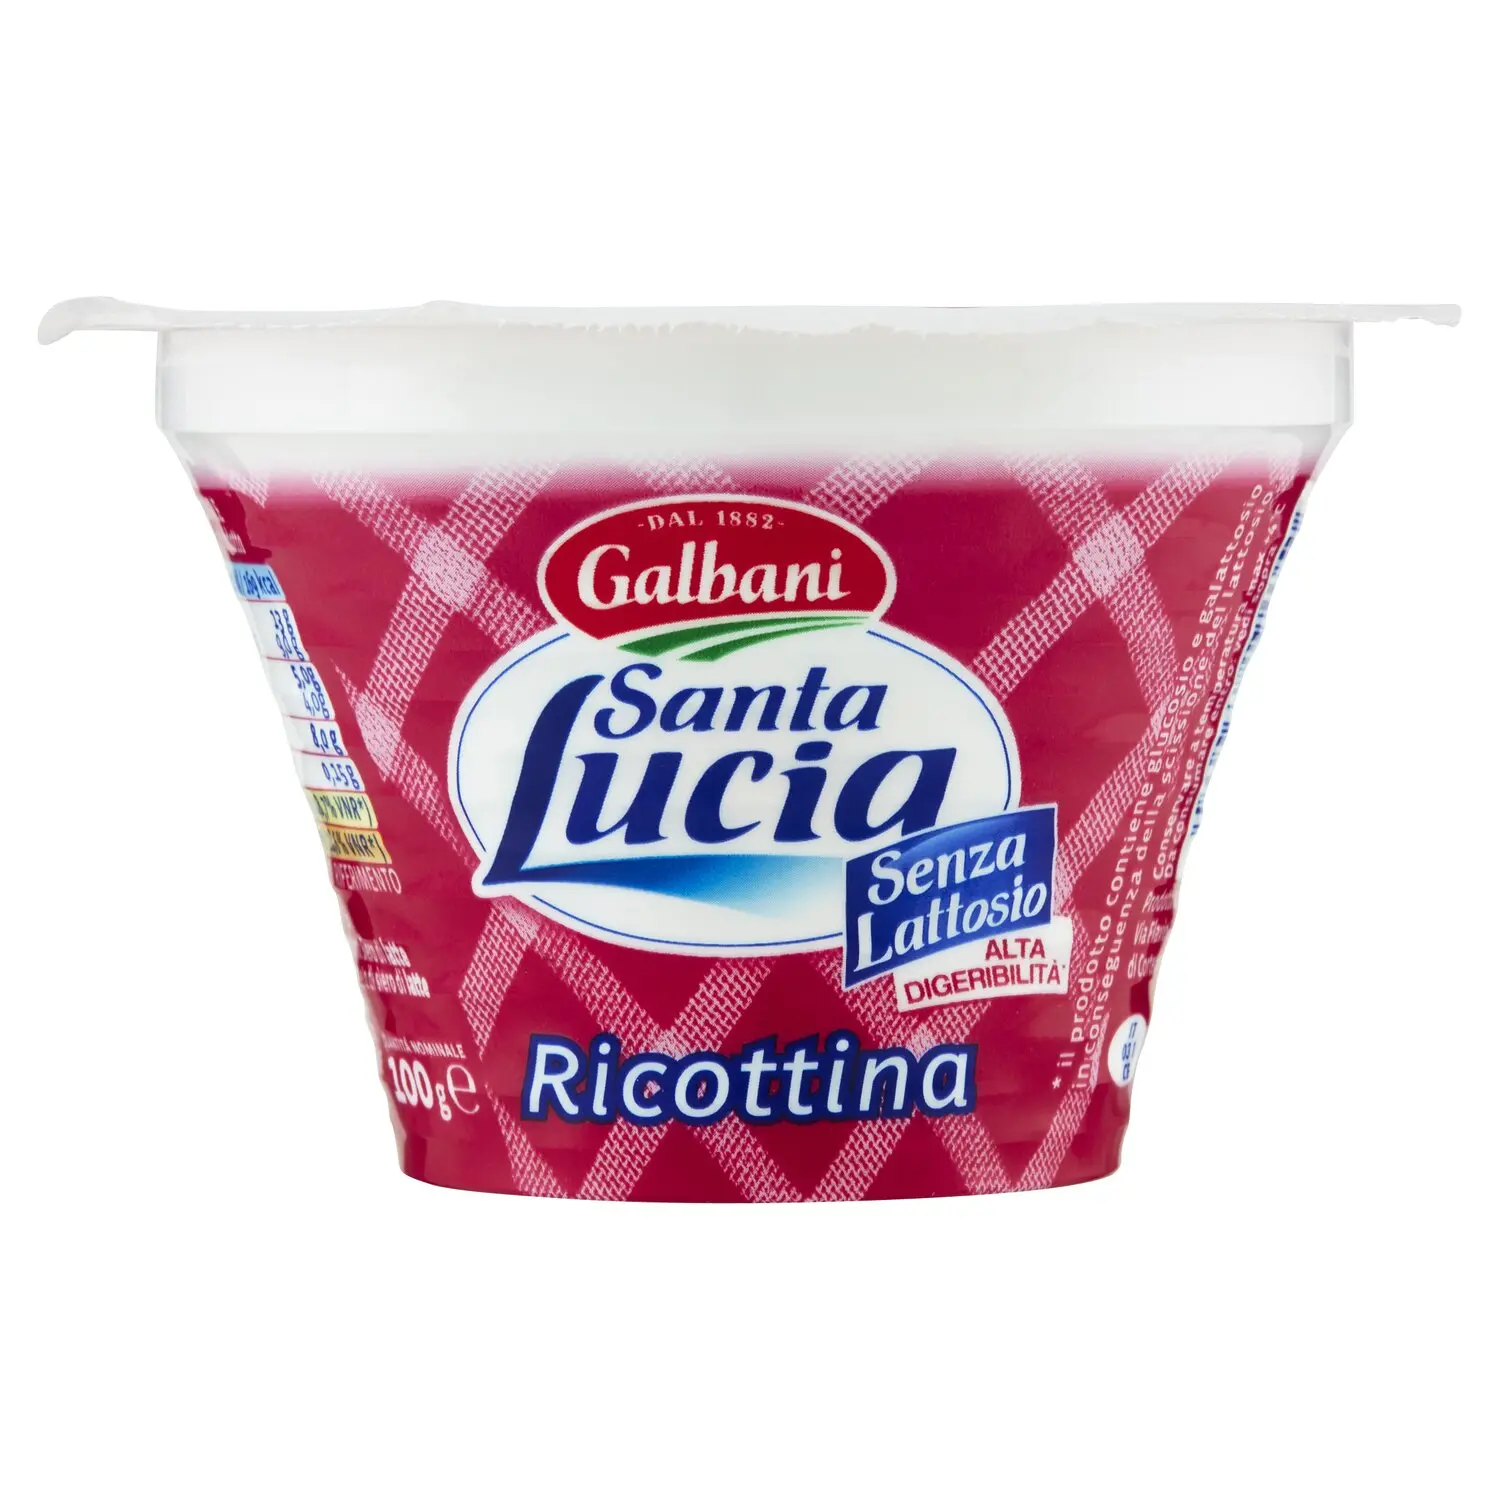 Galbani Santa Lucia Senza Lattosio Ricottina 100 g